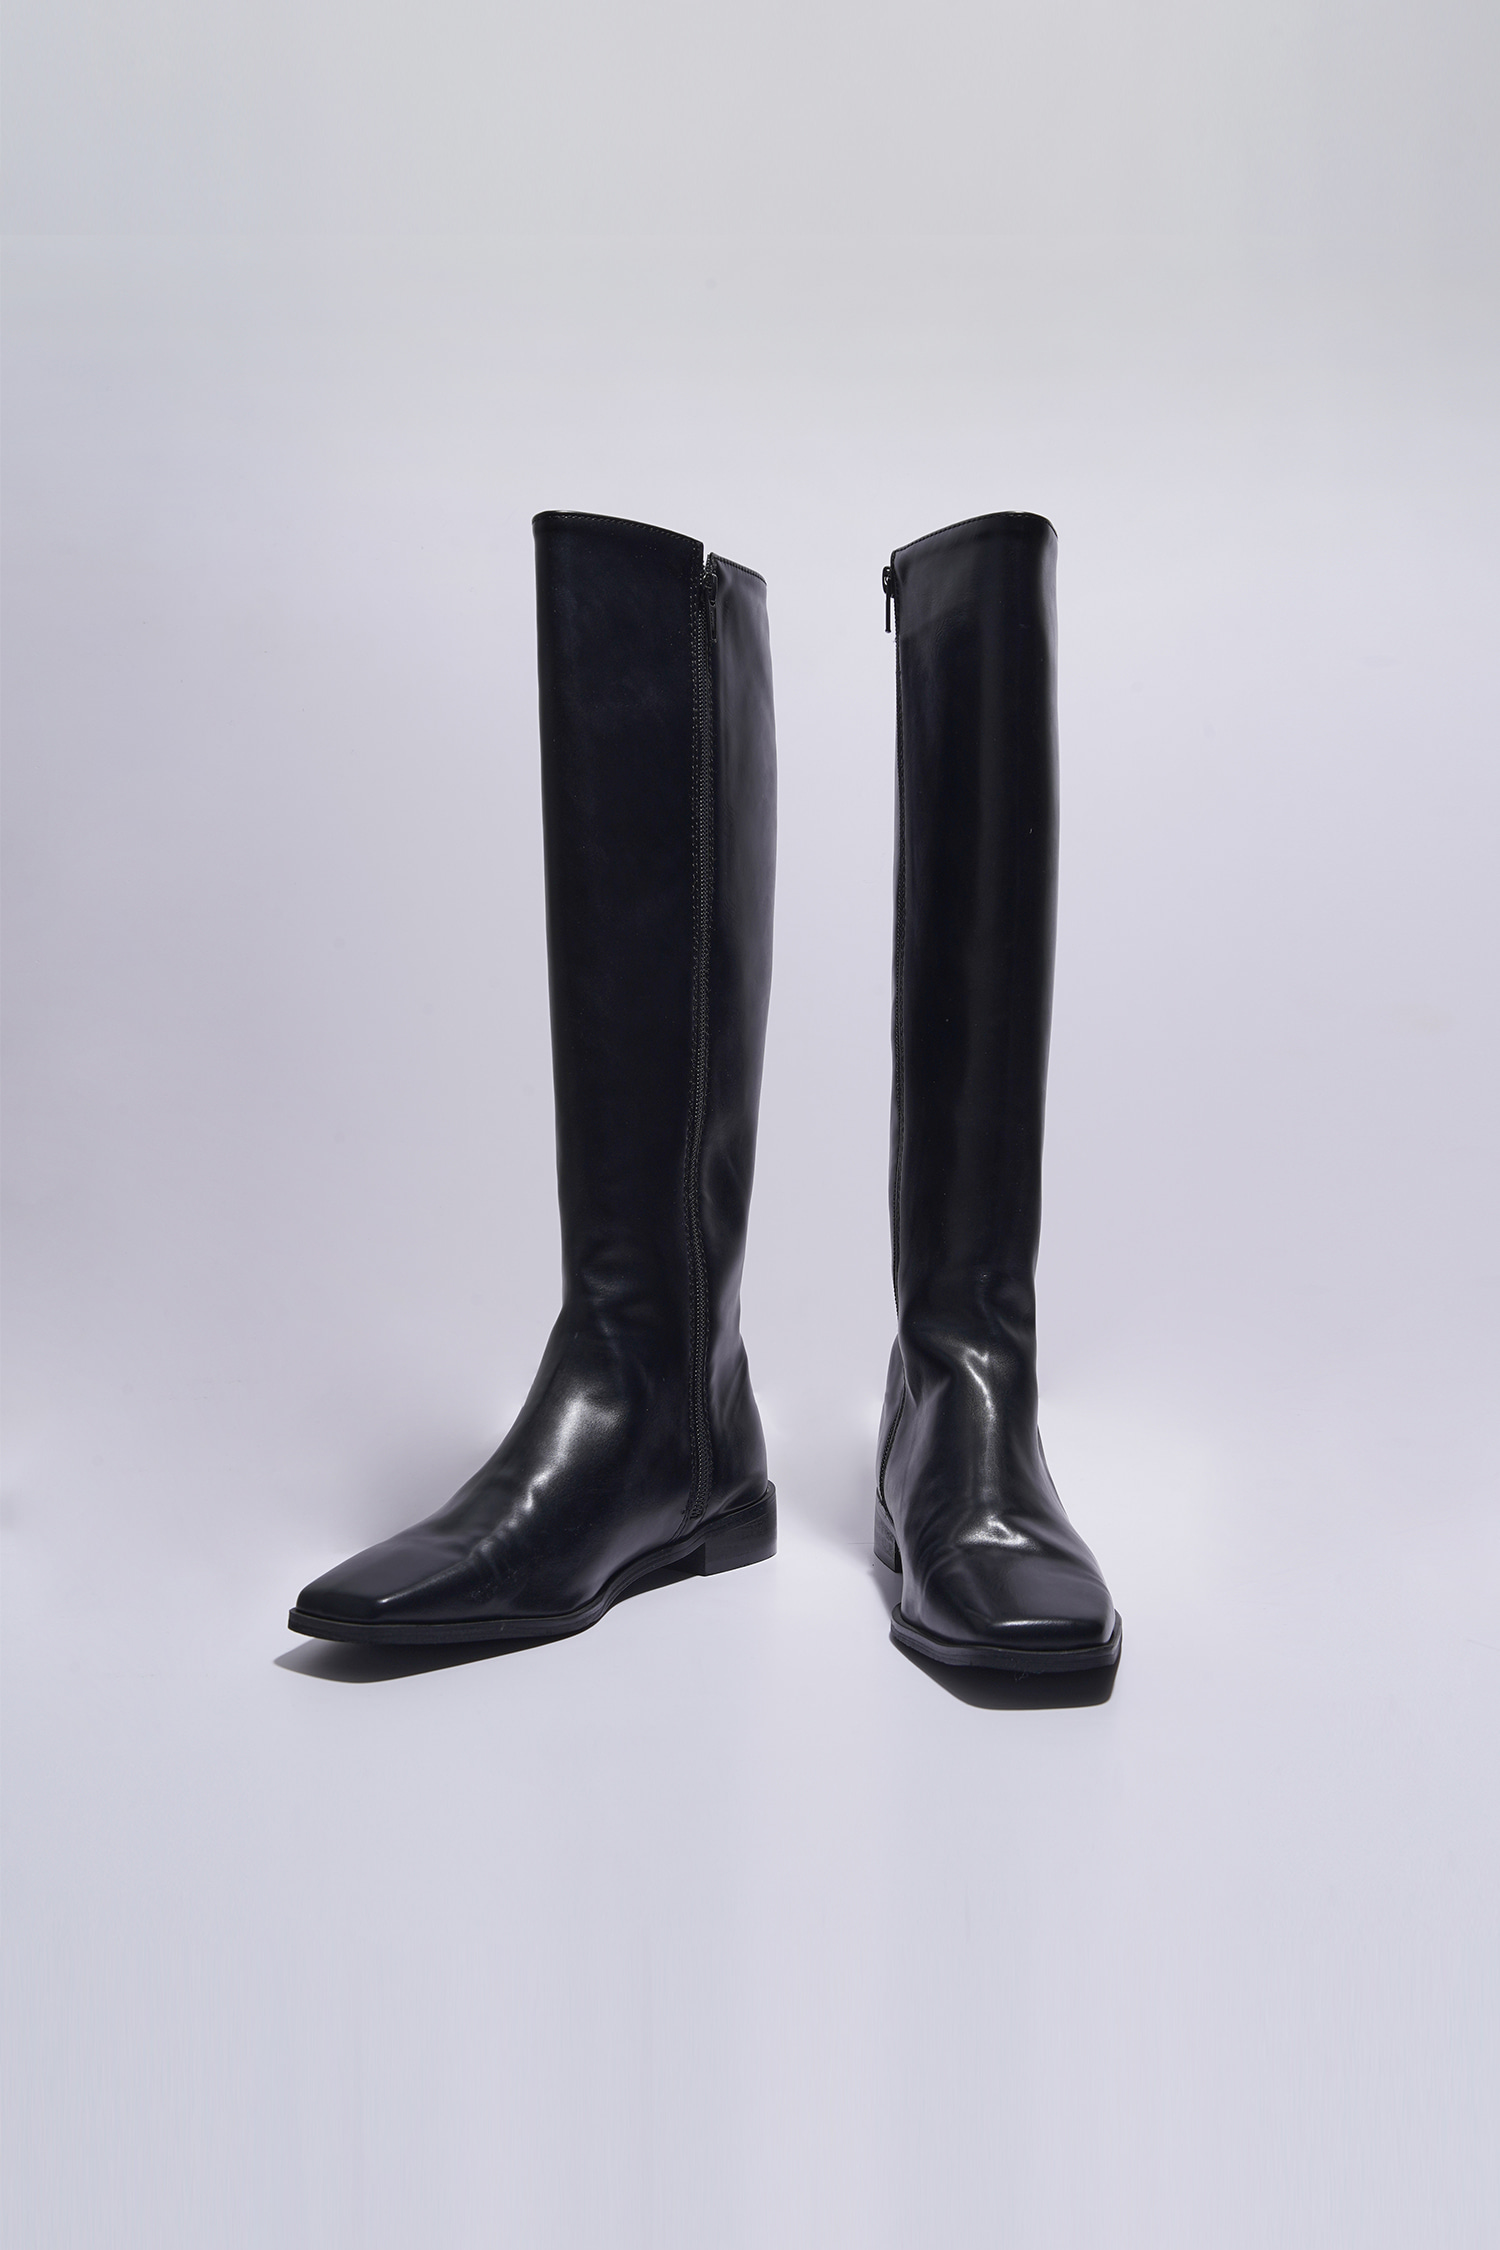 Clair square boots - black